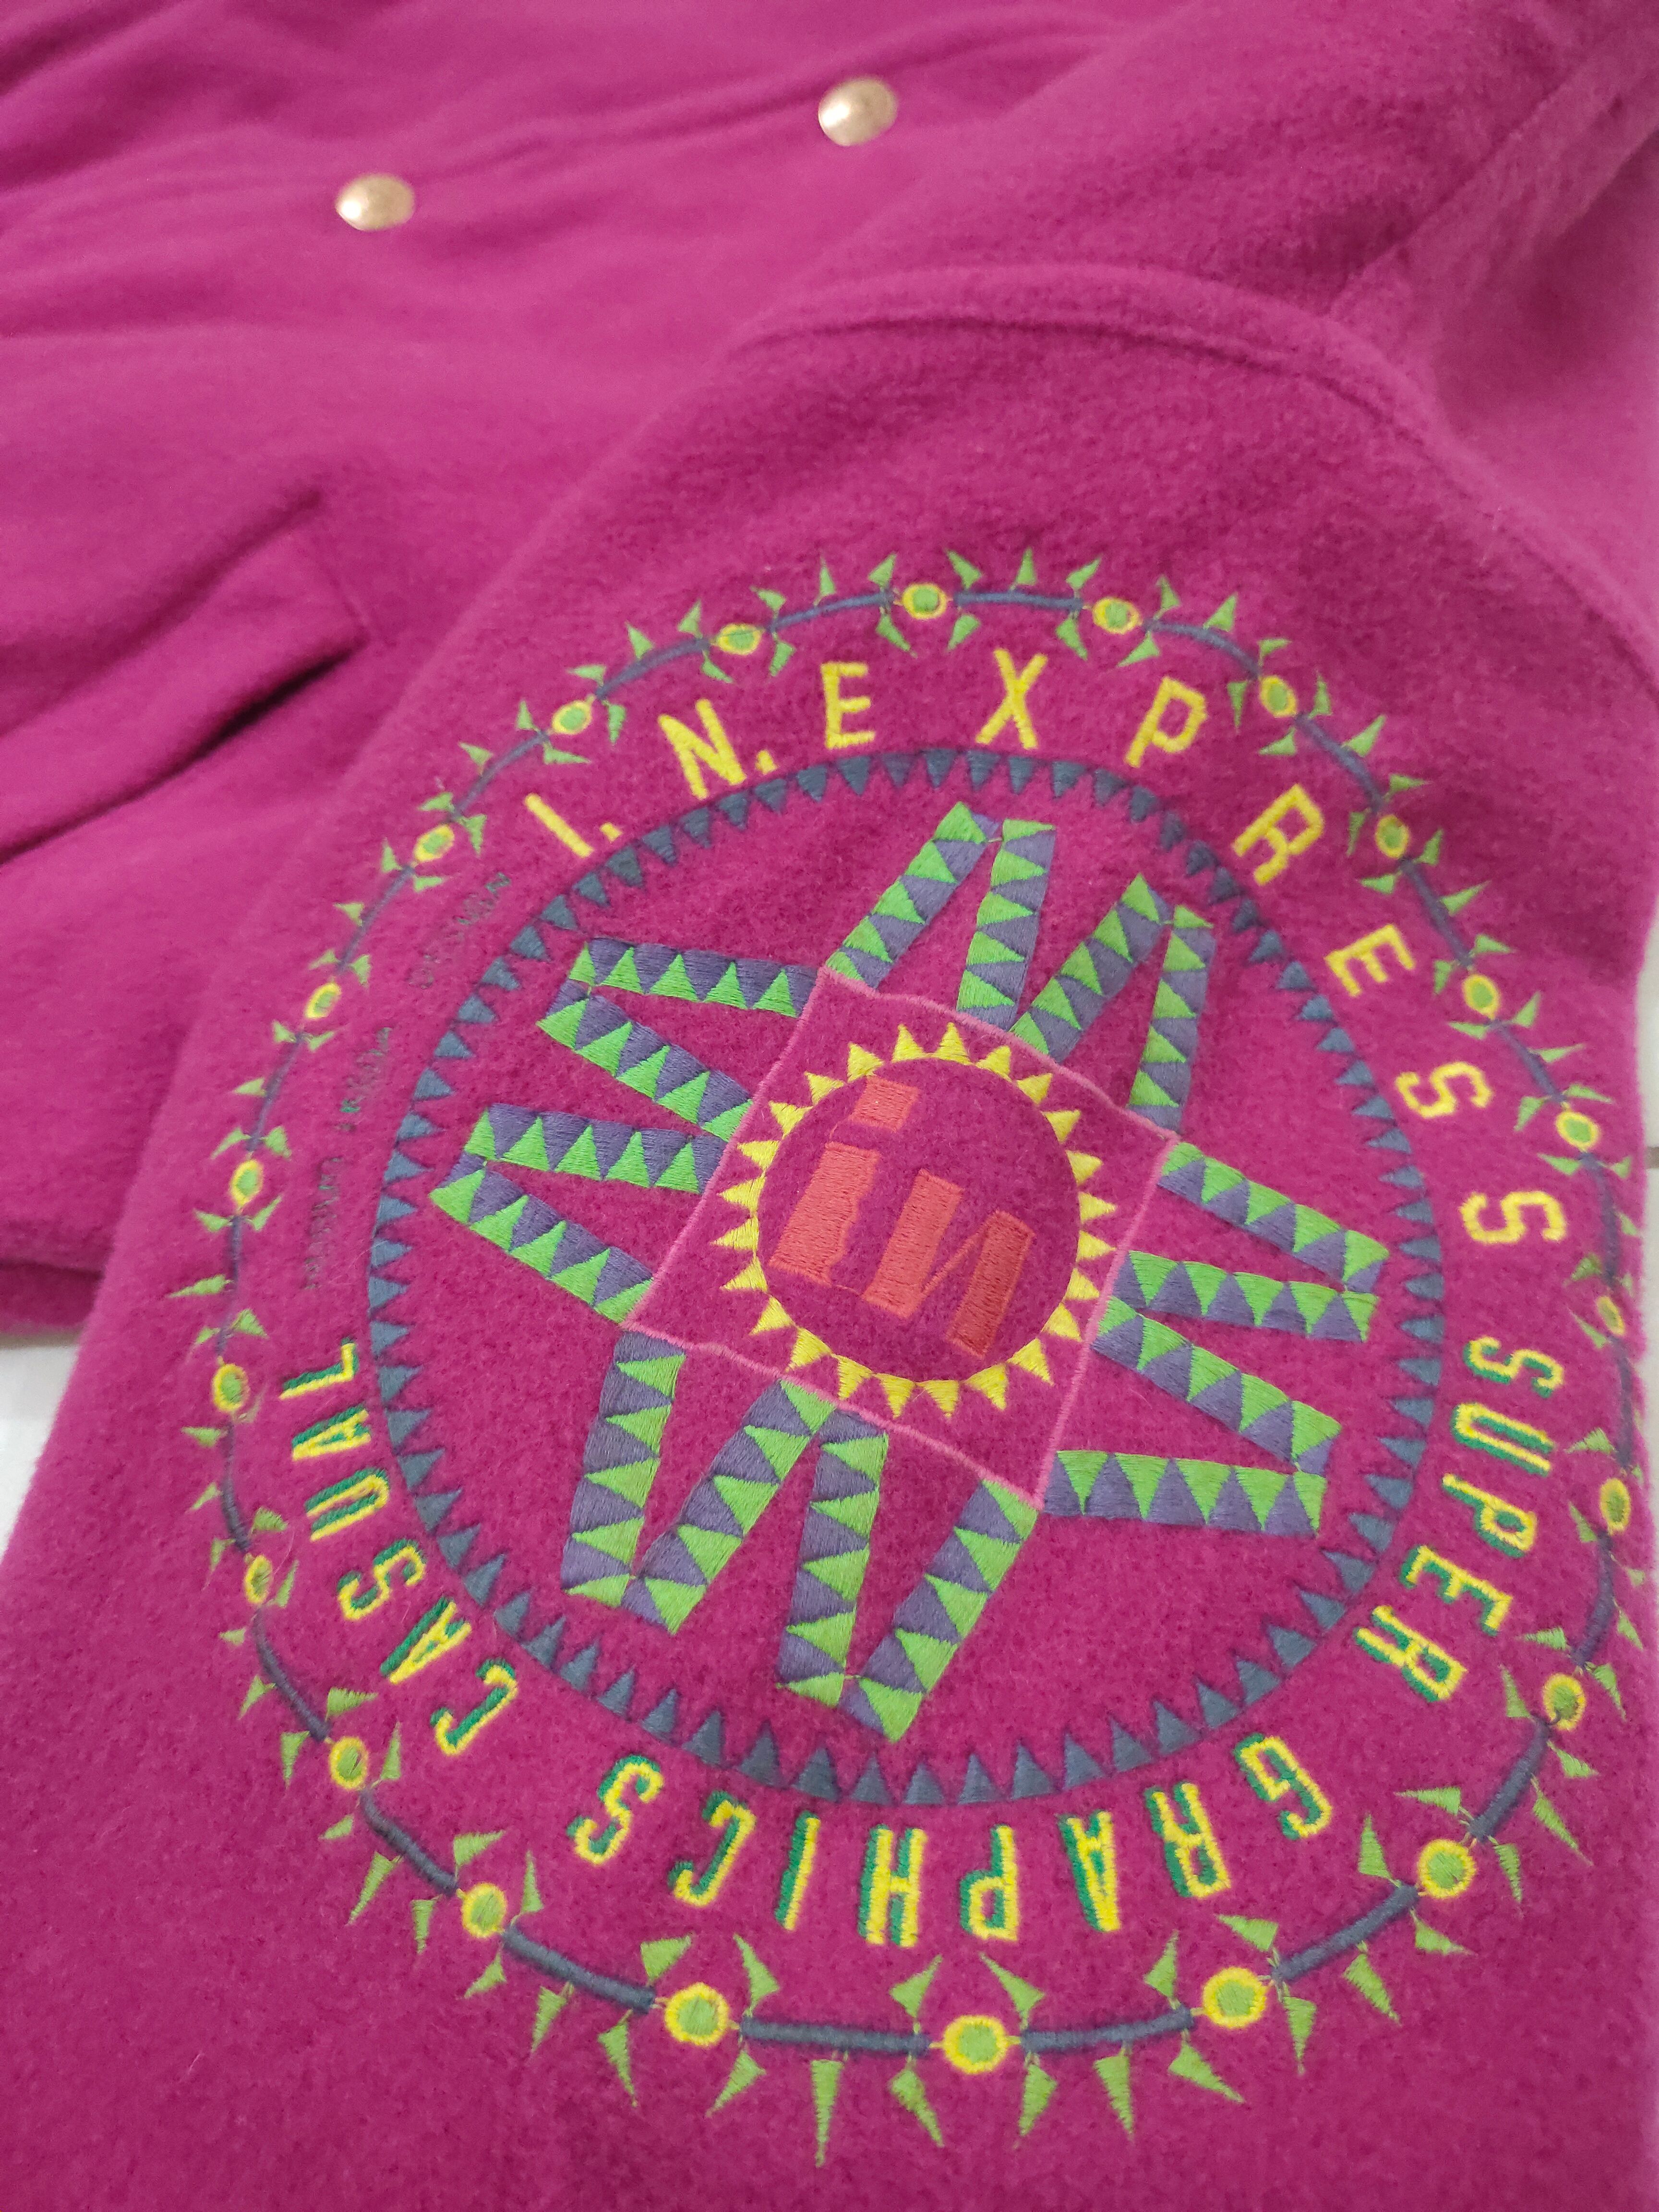 Japanese Brand I.N Express By Nubuo Ikeda Embroidery Navajo Wool Jacket Size US M / EU 48-50 / 2 - 9 Thumbnail